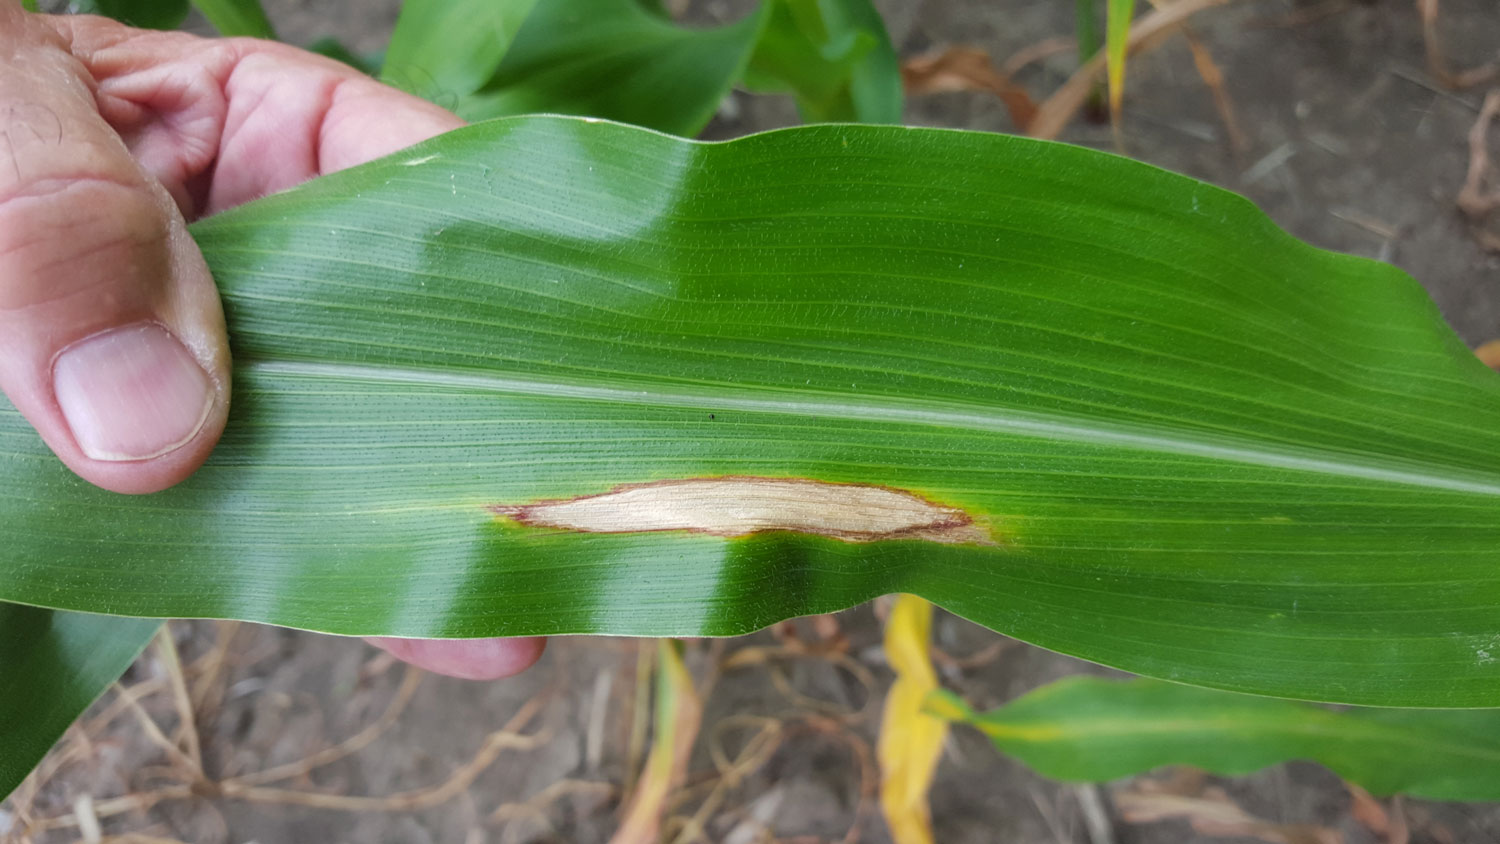 Northern corn leaf blight in corn